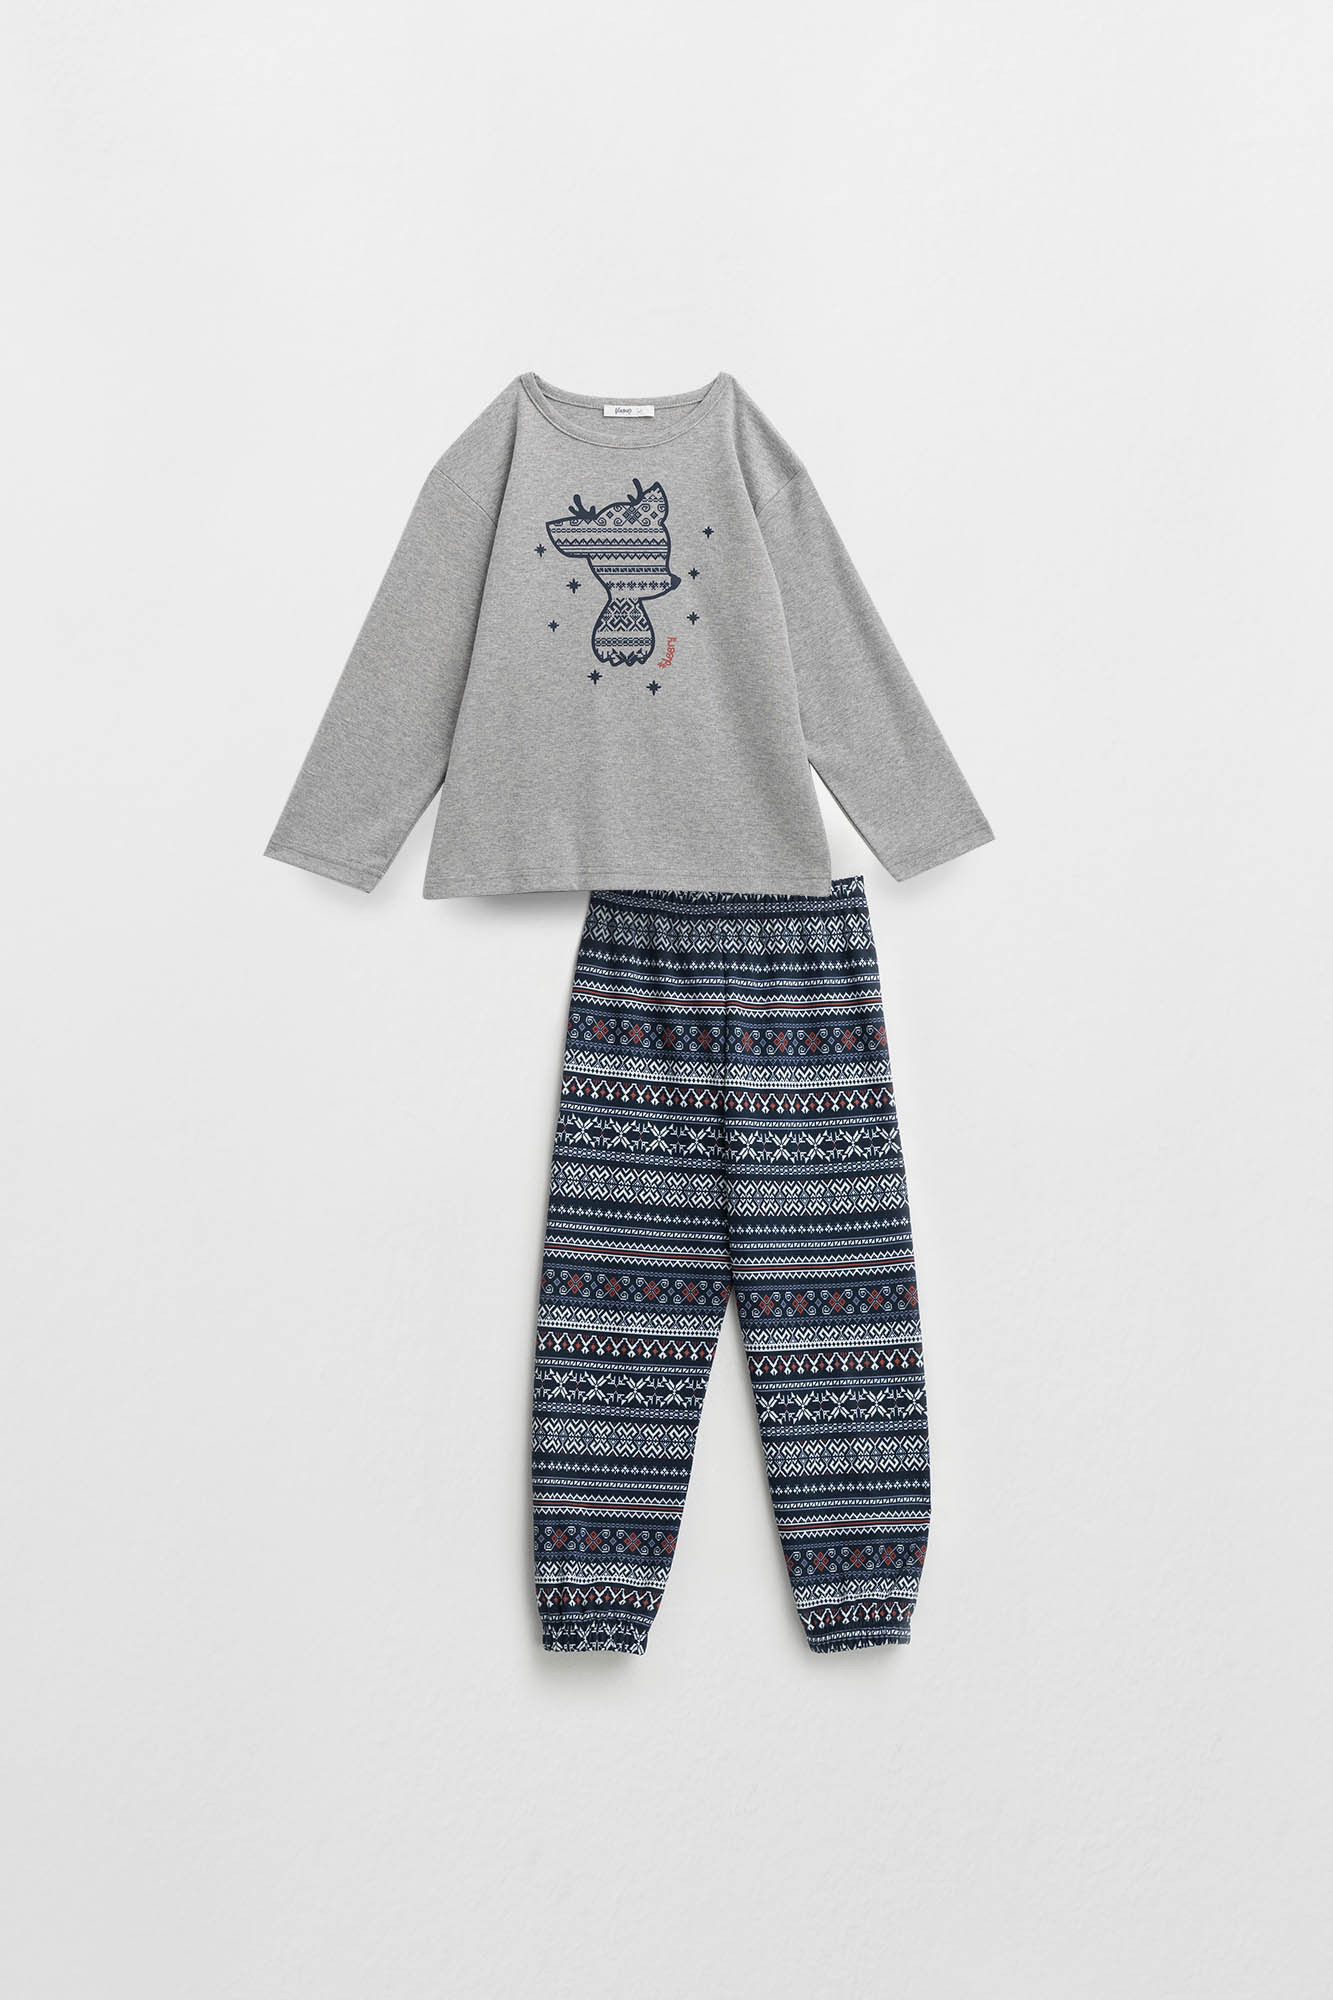 Vamp - Dvoudílné dětské pyžamo - Darby 17576 - Vamp gray melange 10